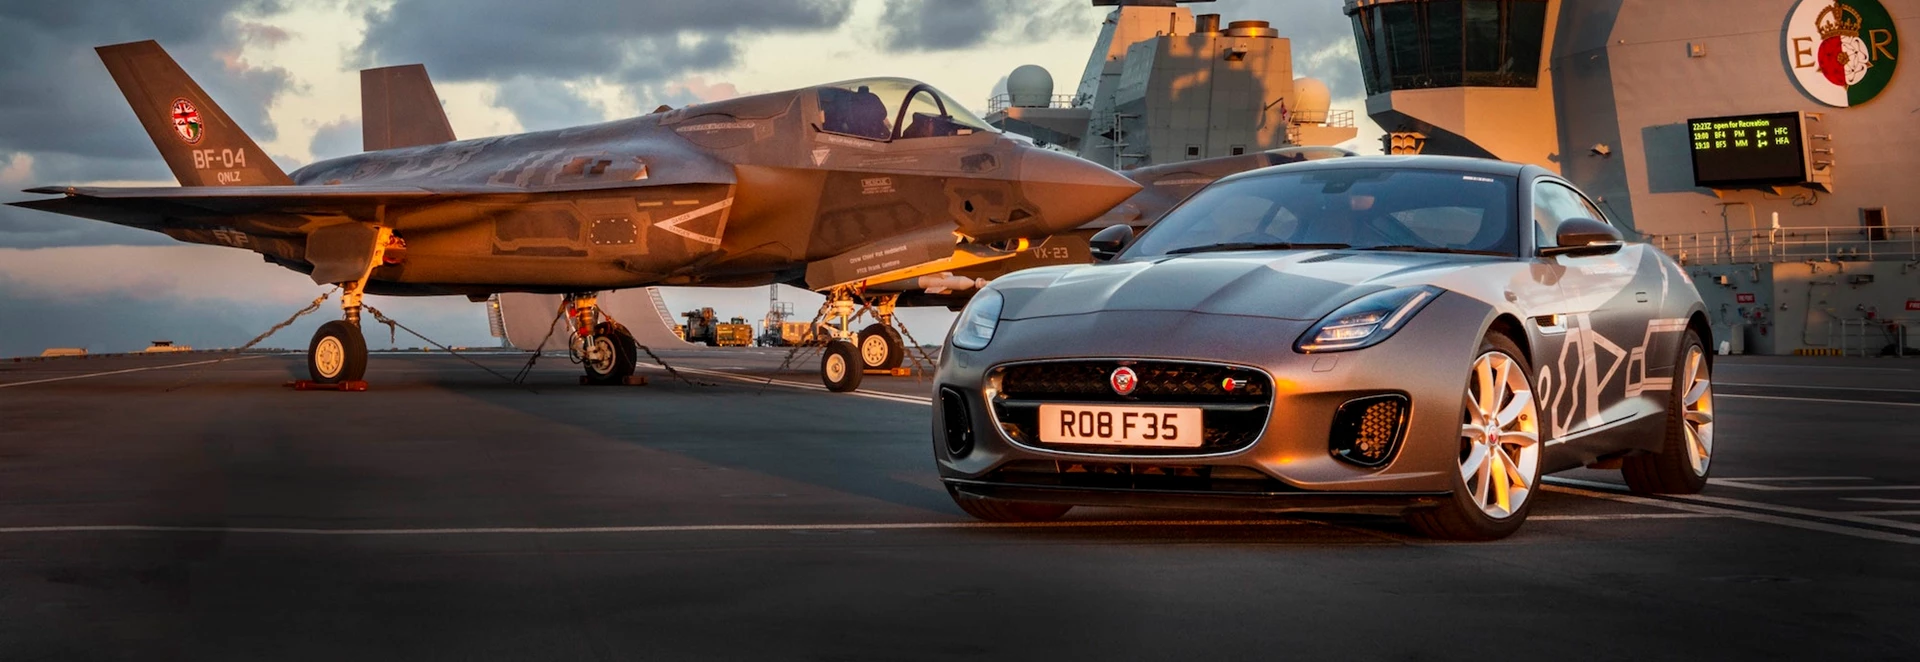 Jaguar part of ‘Best of British Engineering’ showcase